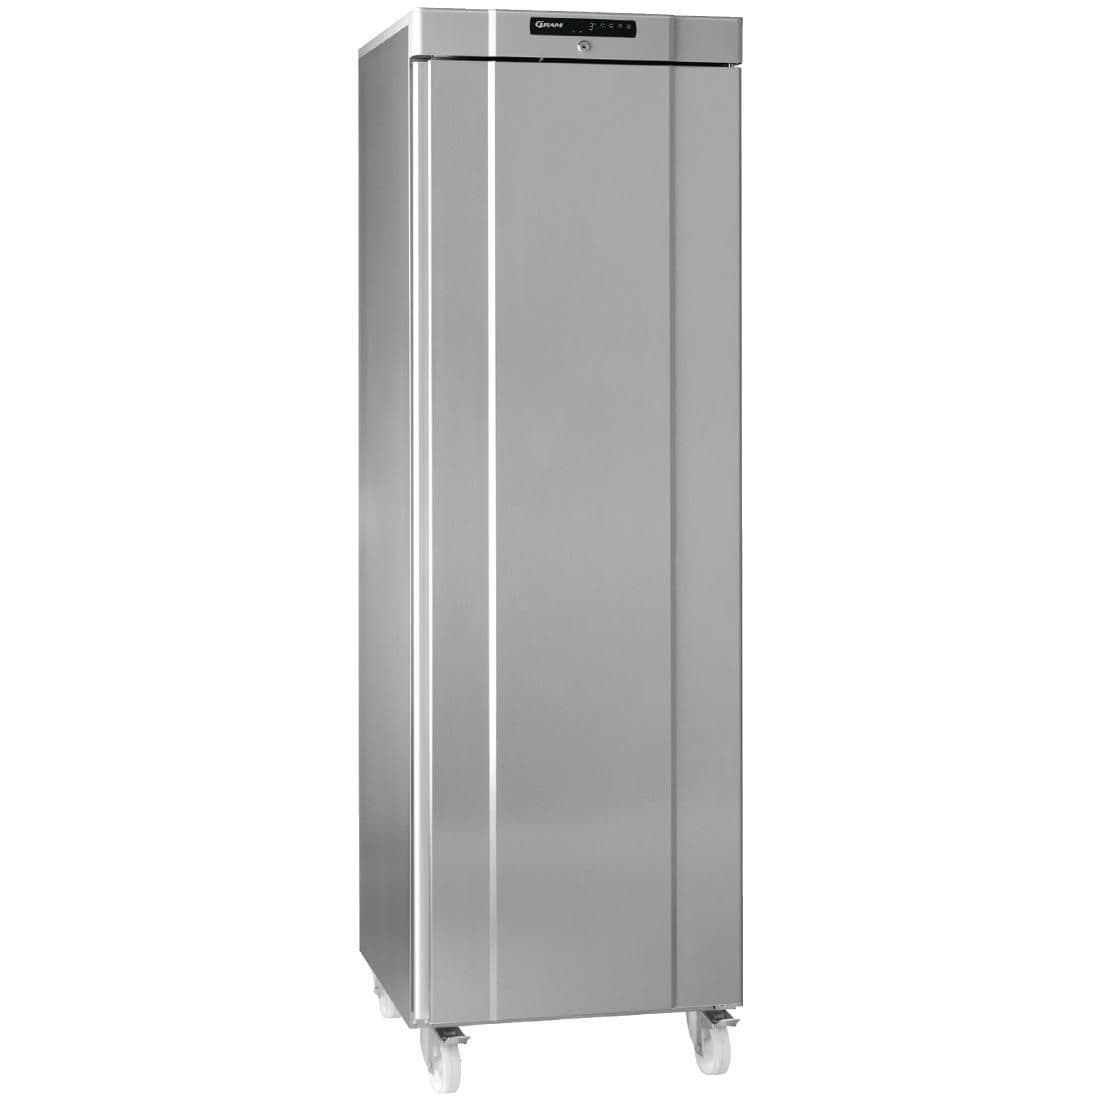 Gram Compact 1 Door 346Ltr Cabinet Freezer F410 RG C 6N JD Catering Equipment Solutions Ltd